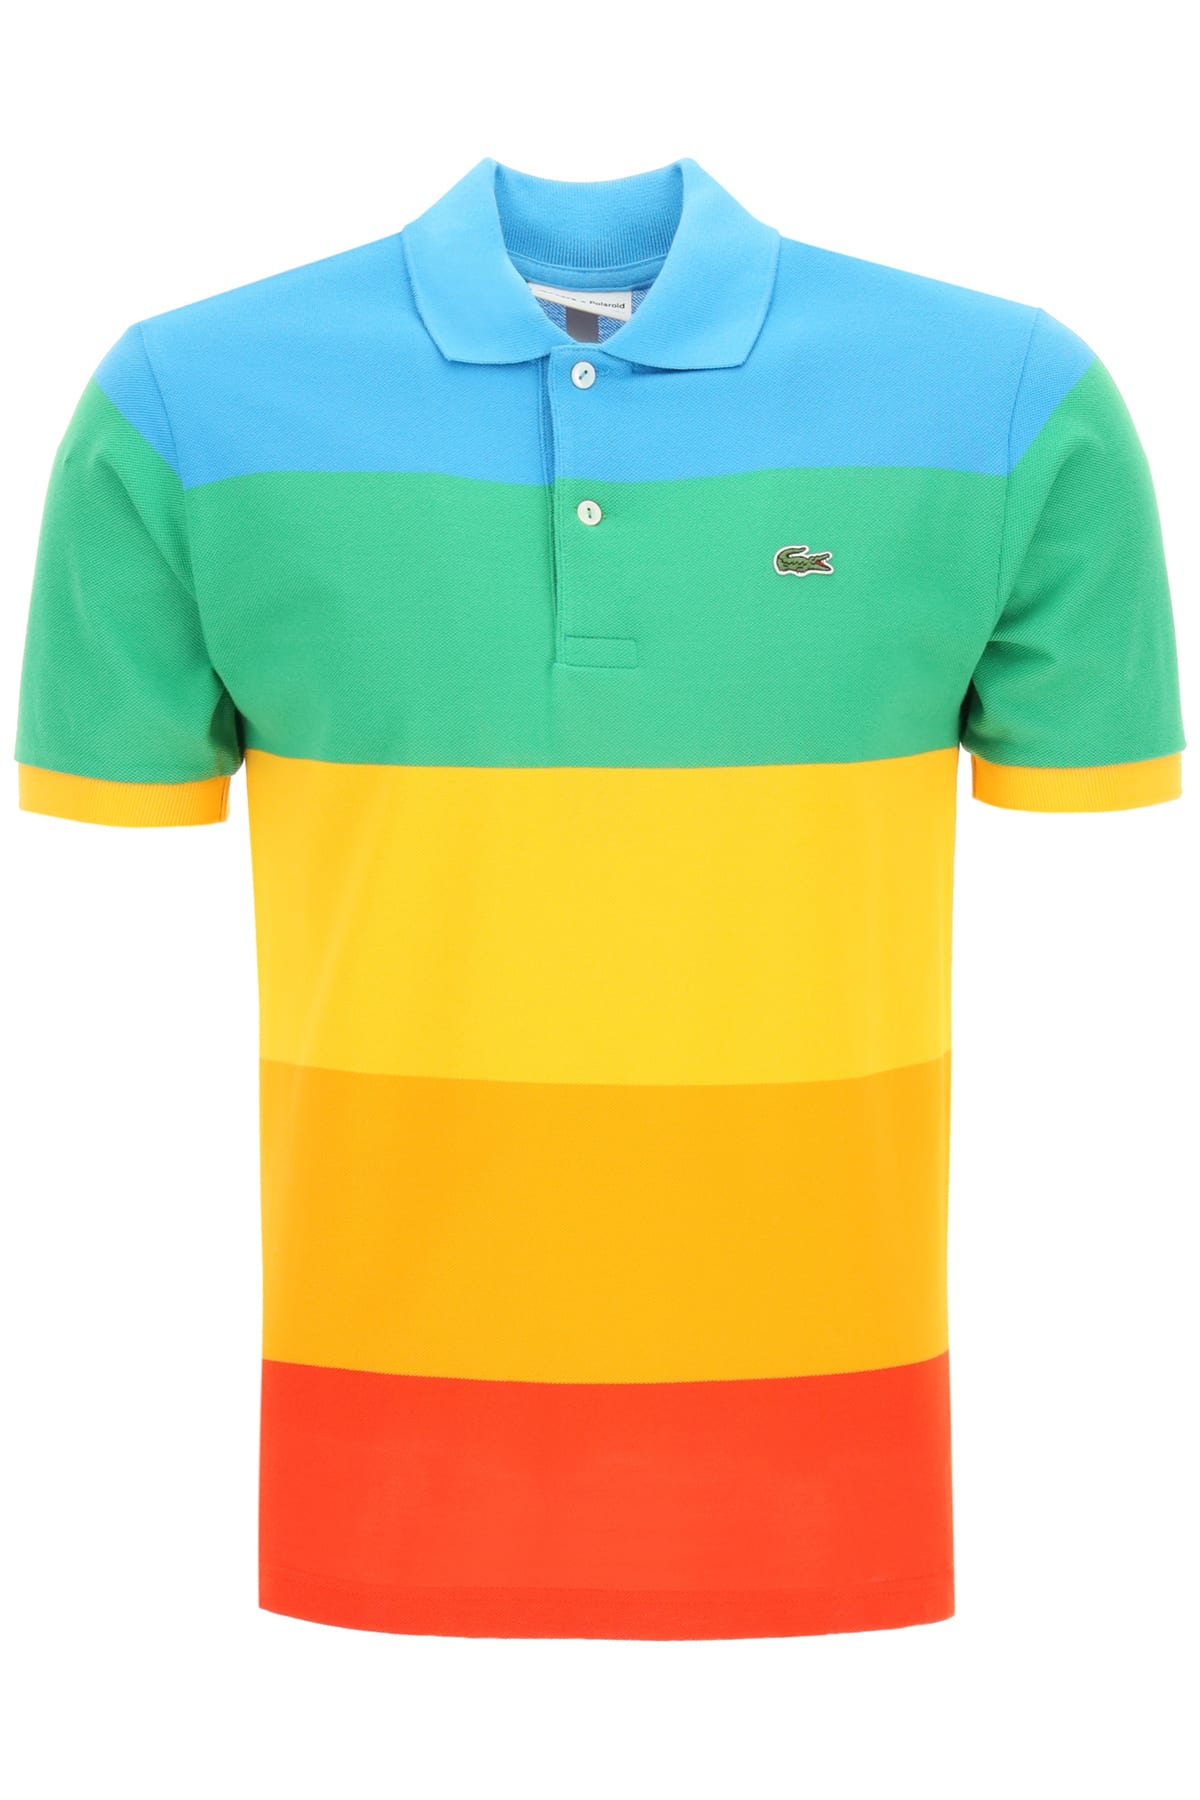 Lacoste Lacoste X Polaroid Rainbow Polo Shirt